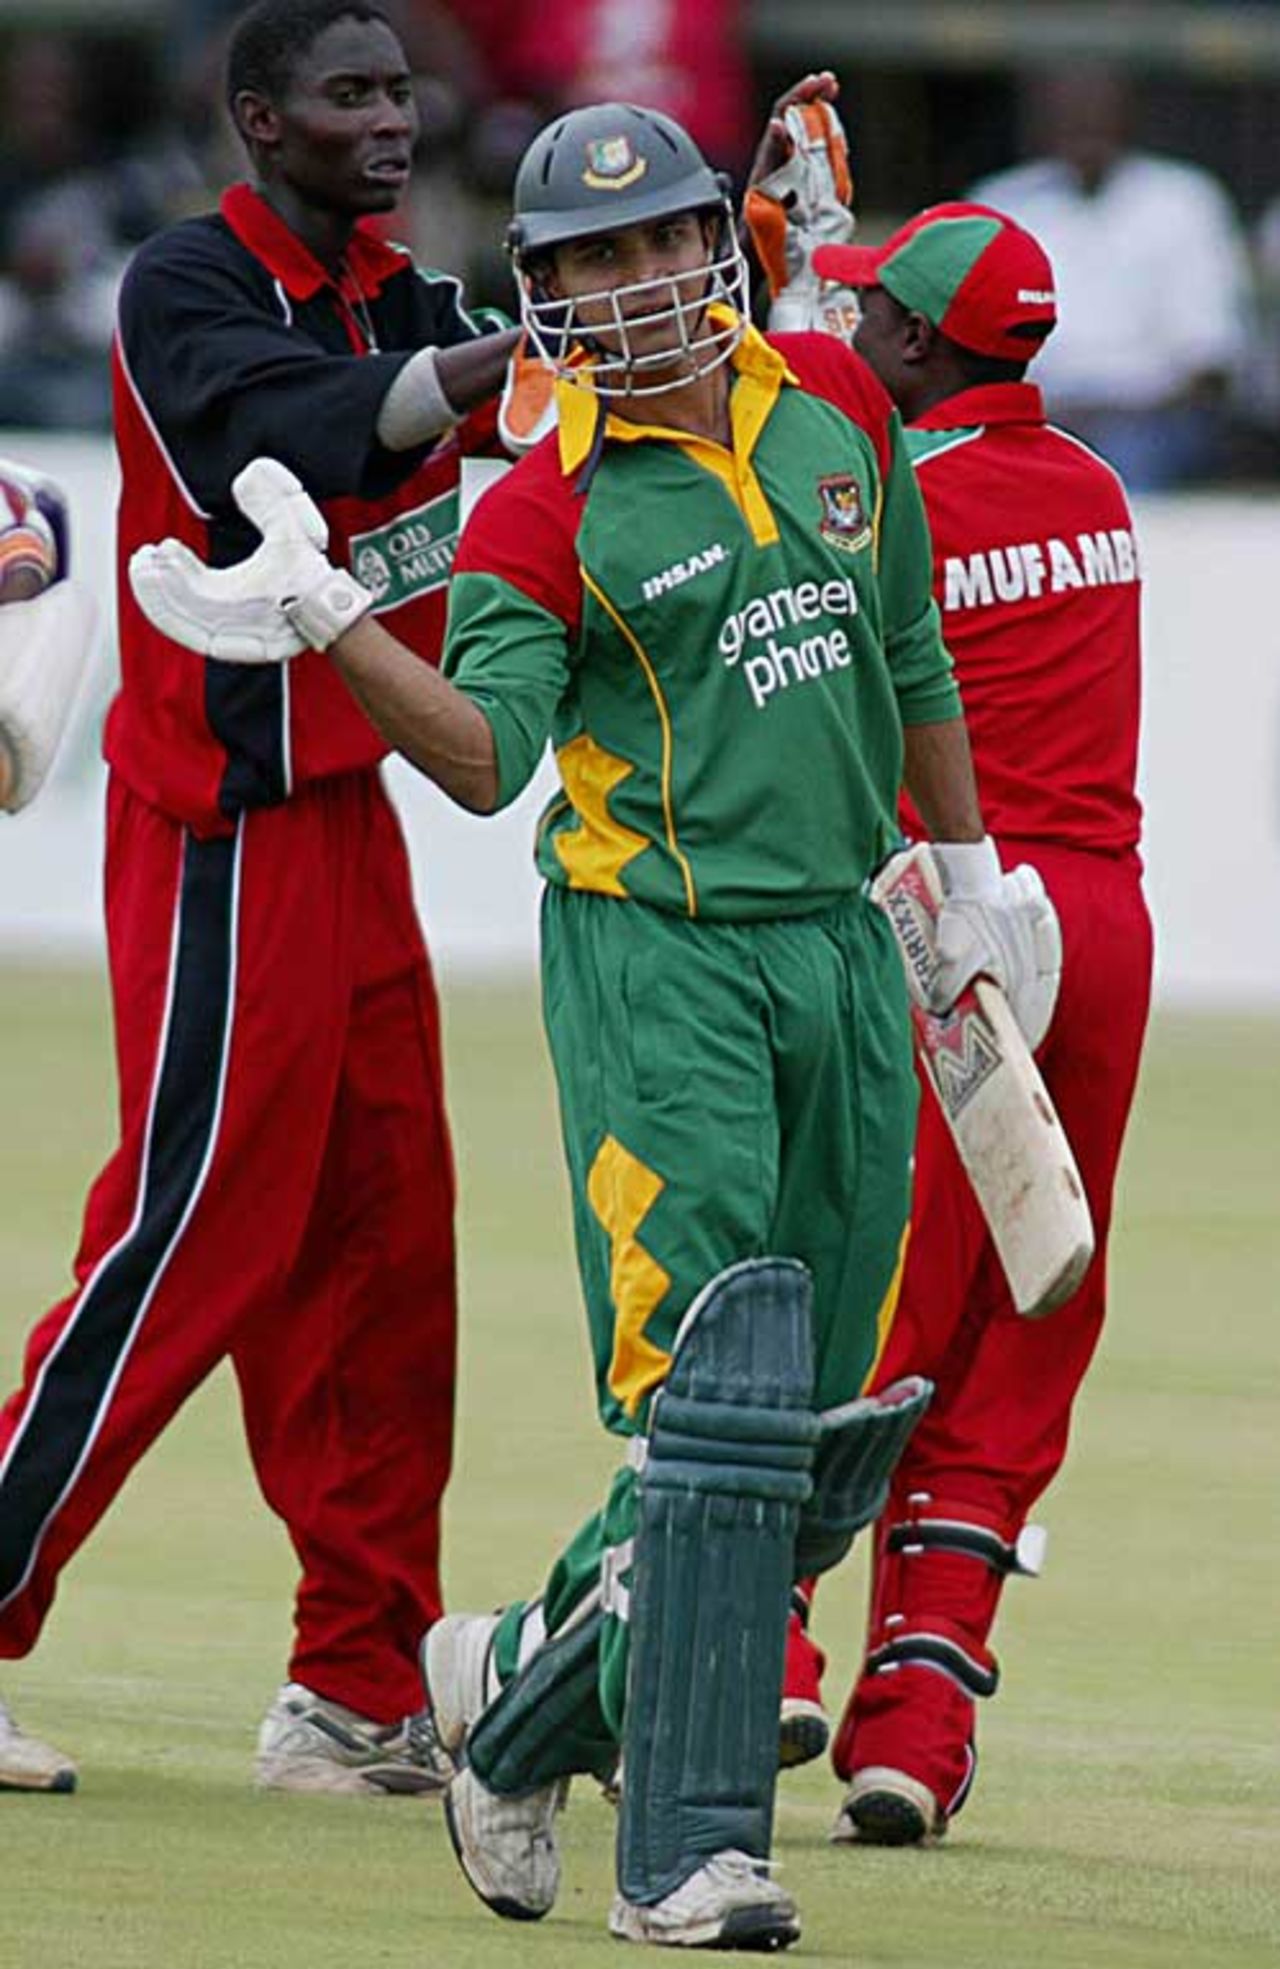 Mashrafe Mortaza falls late in Bangladesh's innings, Zimbabwe v Bangladesh, 1st ODI, Harare, February 4, 2007